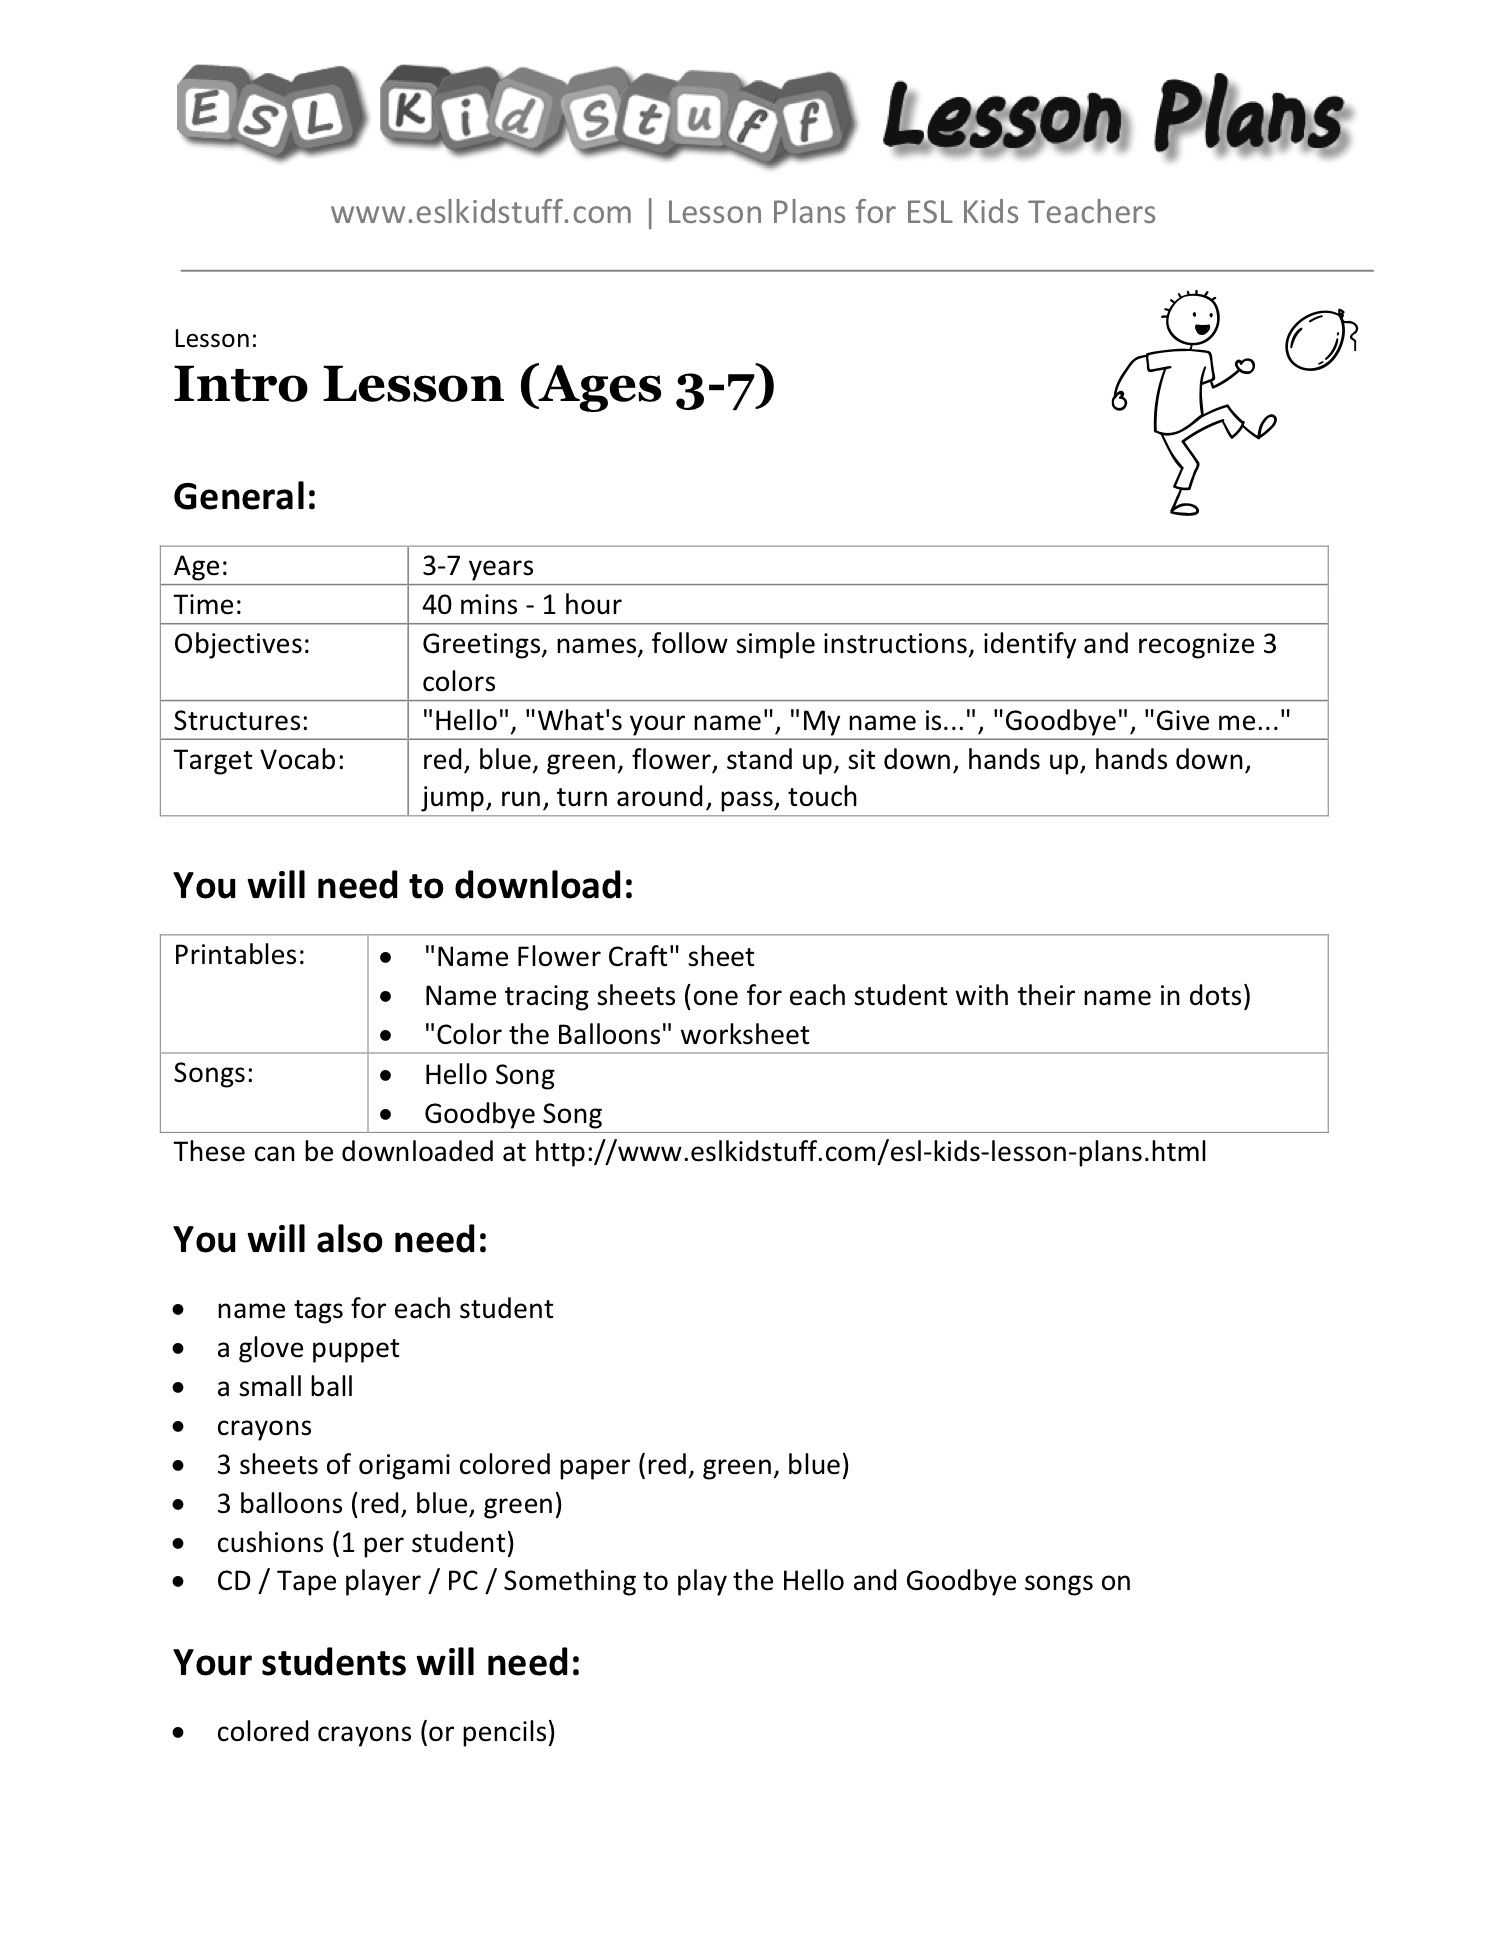 First Grade Esl Worksheets Along with Lesson Plan for Ells Esl Kid Stuff Website This Website Has